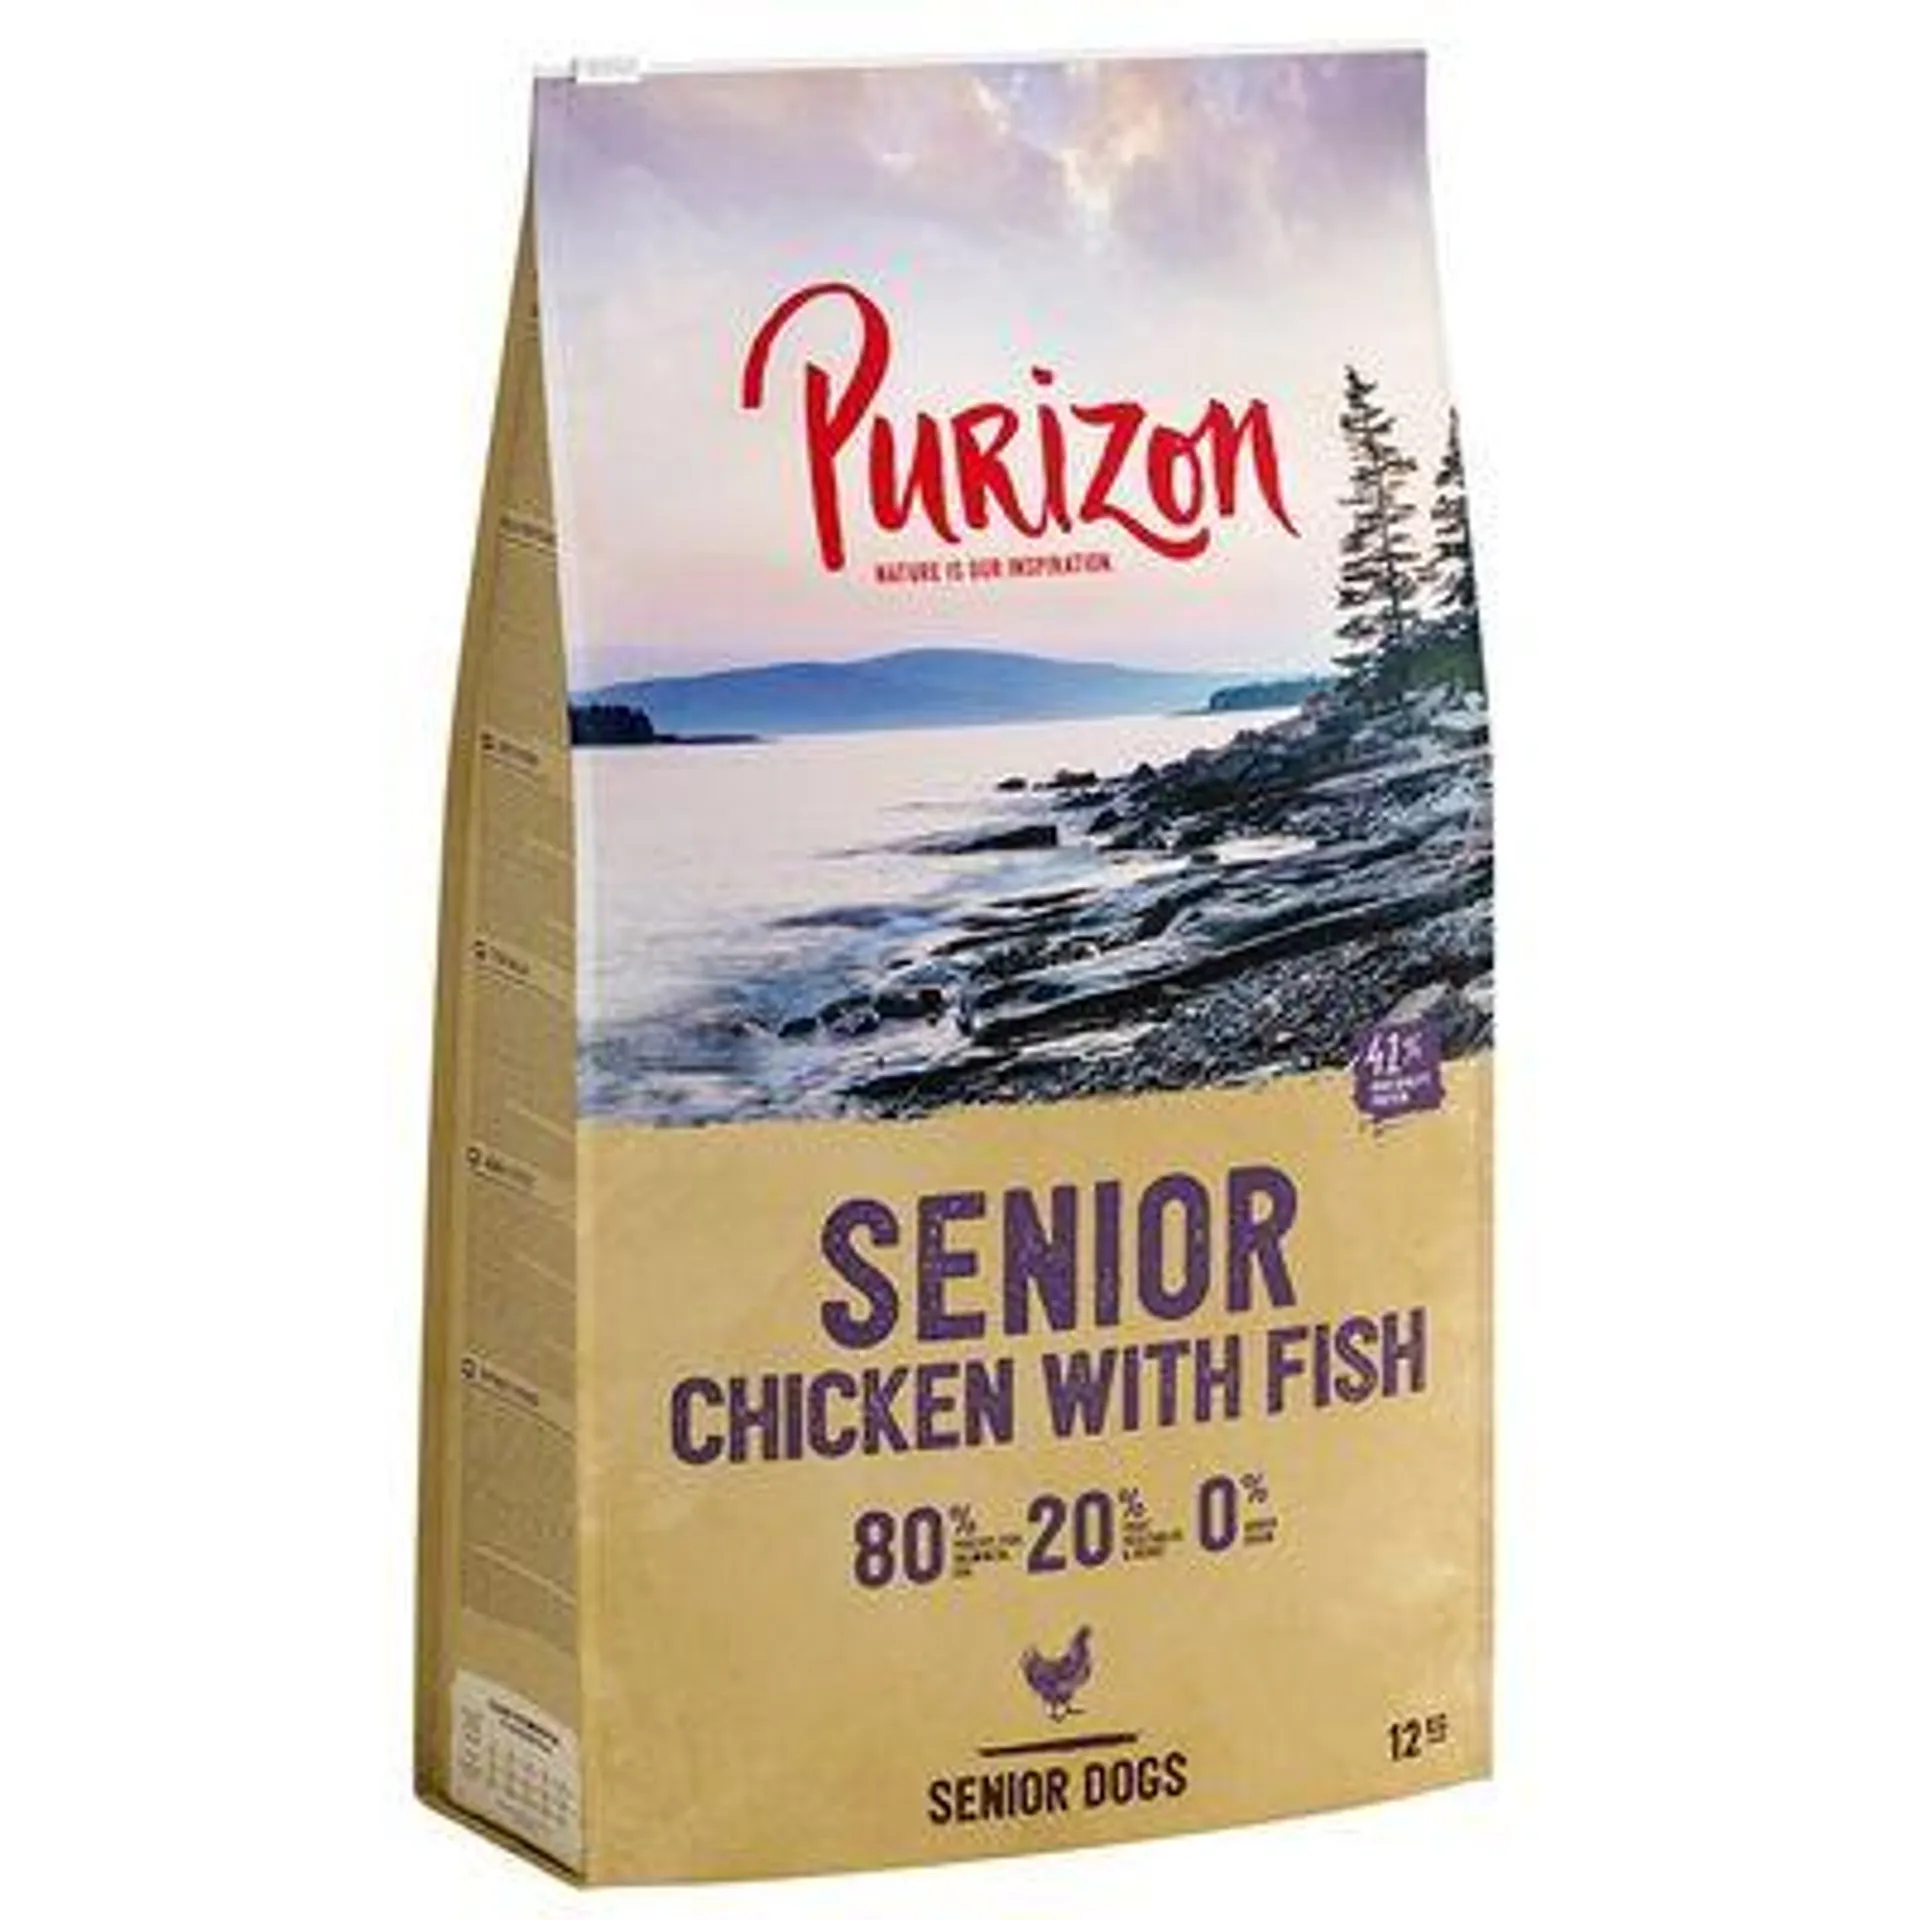 Purizon Senior Chicken with Fish – Grain-free